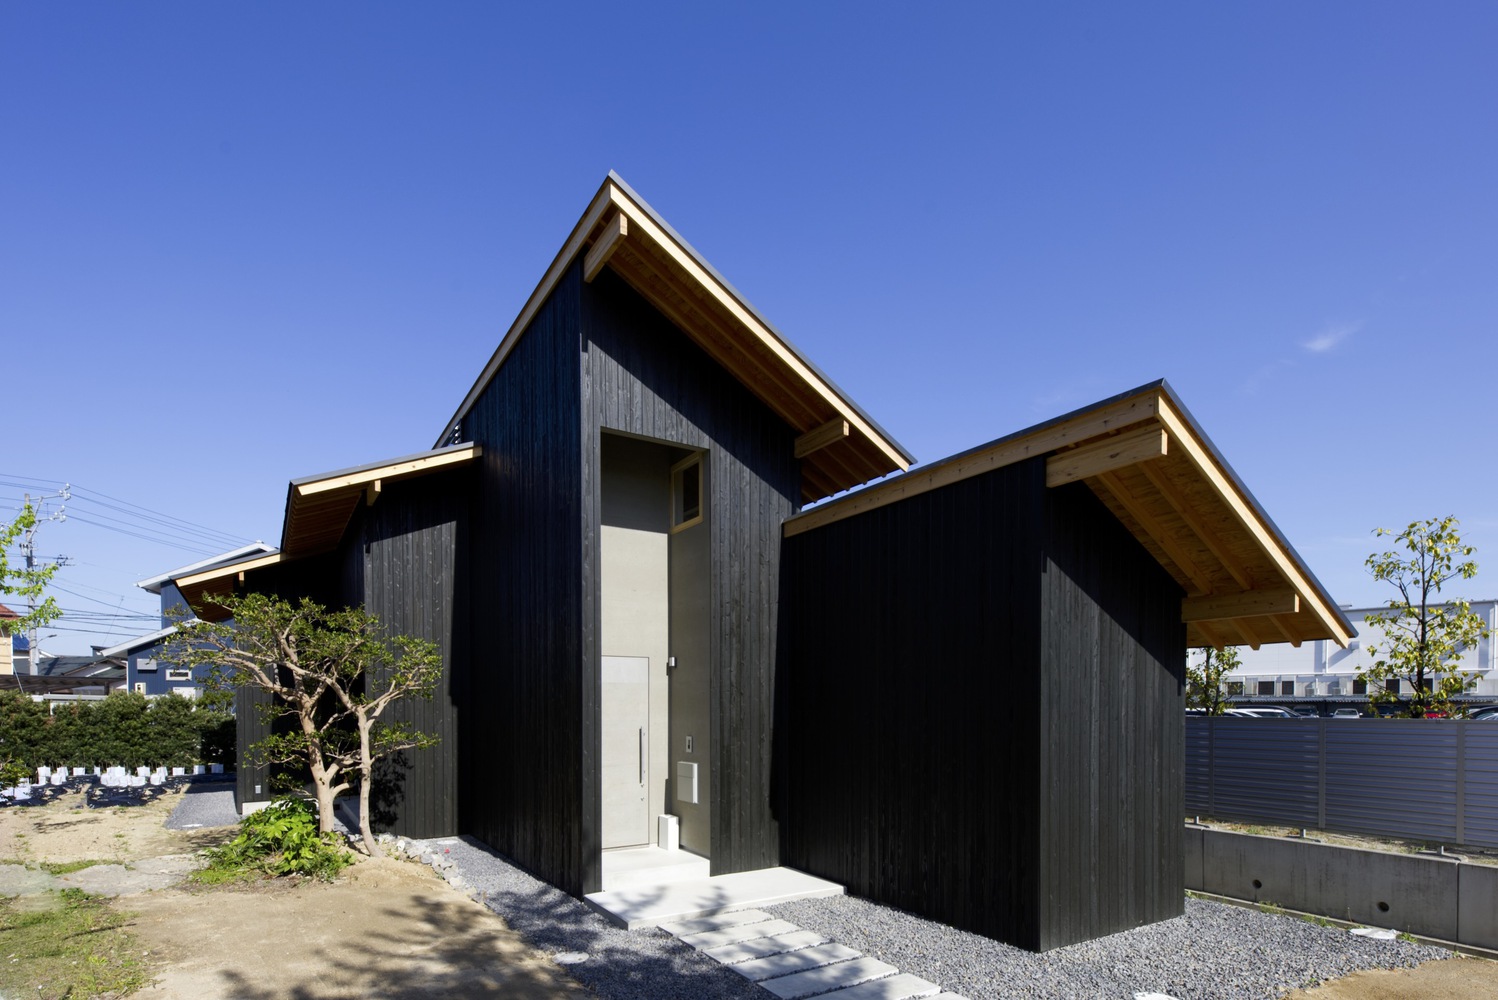 House in Hantsuki by Katsutoshi Sasaki + Associates